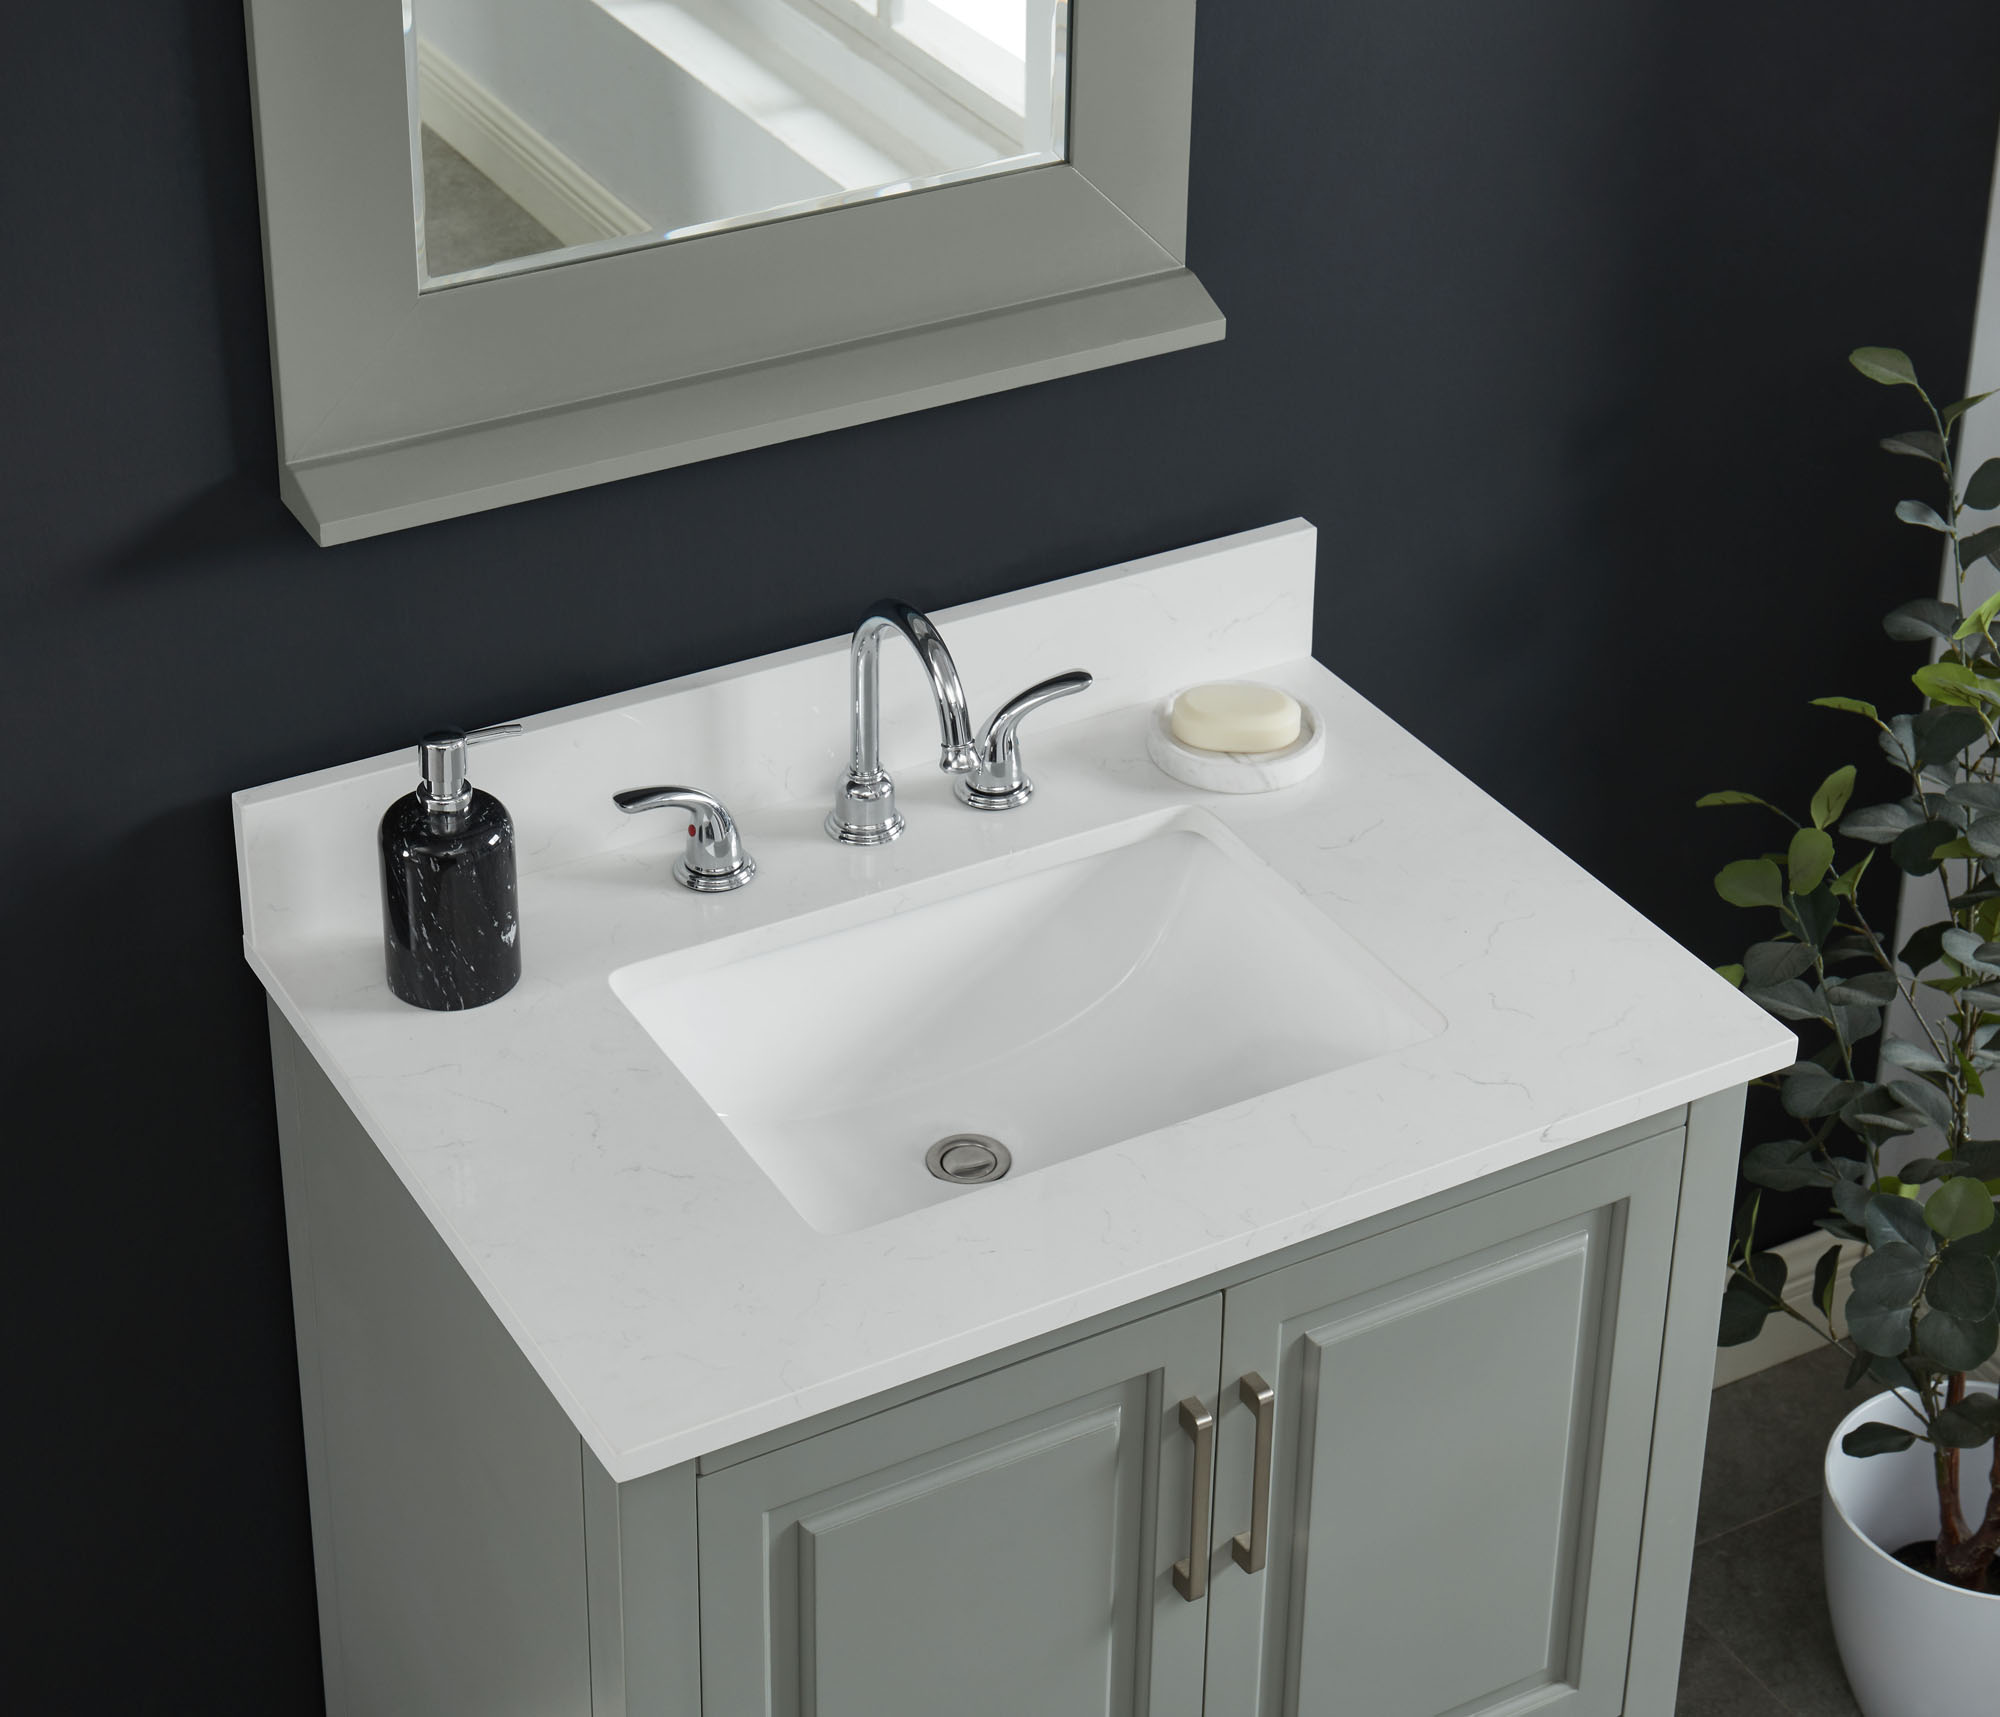 31-in Carrara White Quartz Single Sink Bathroom Vanity Top